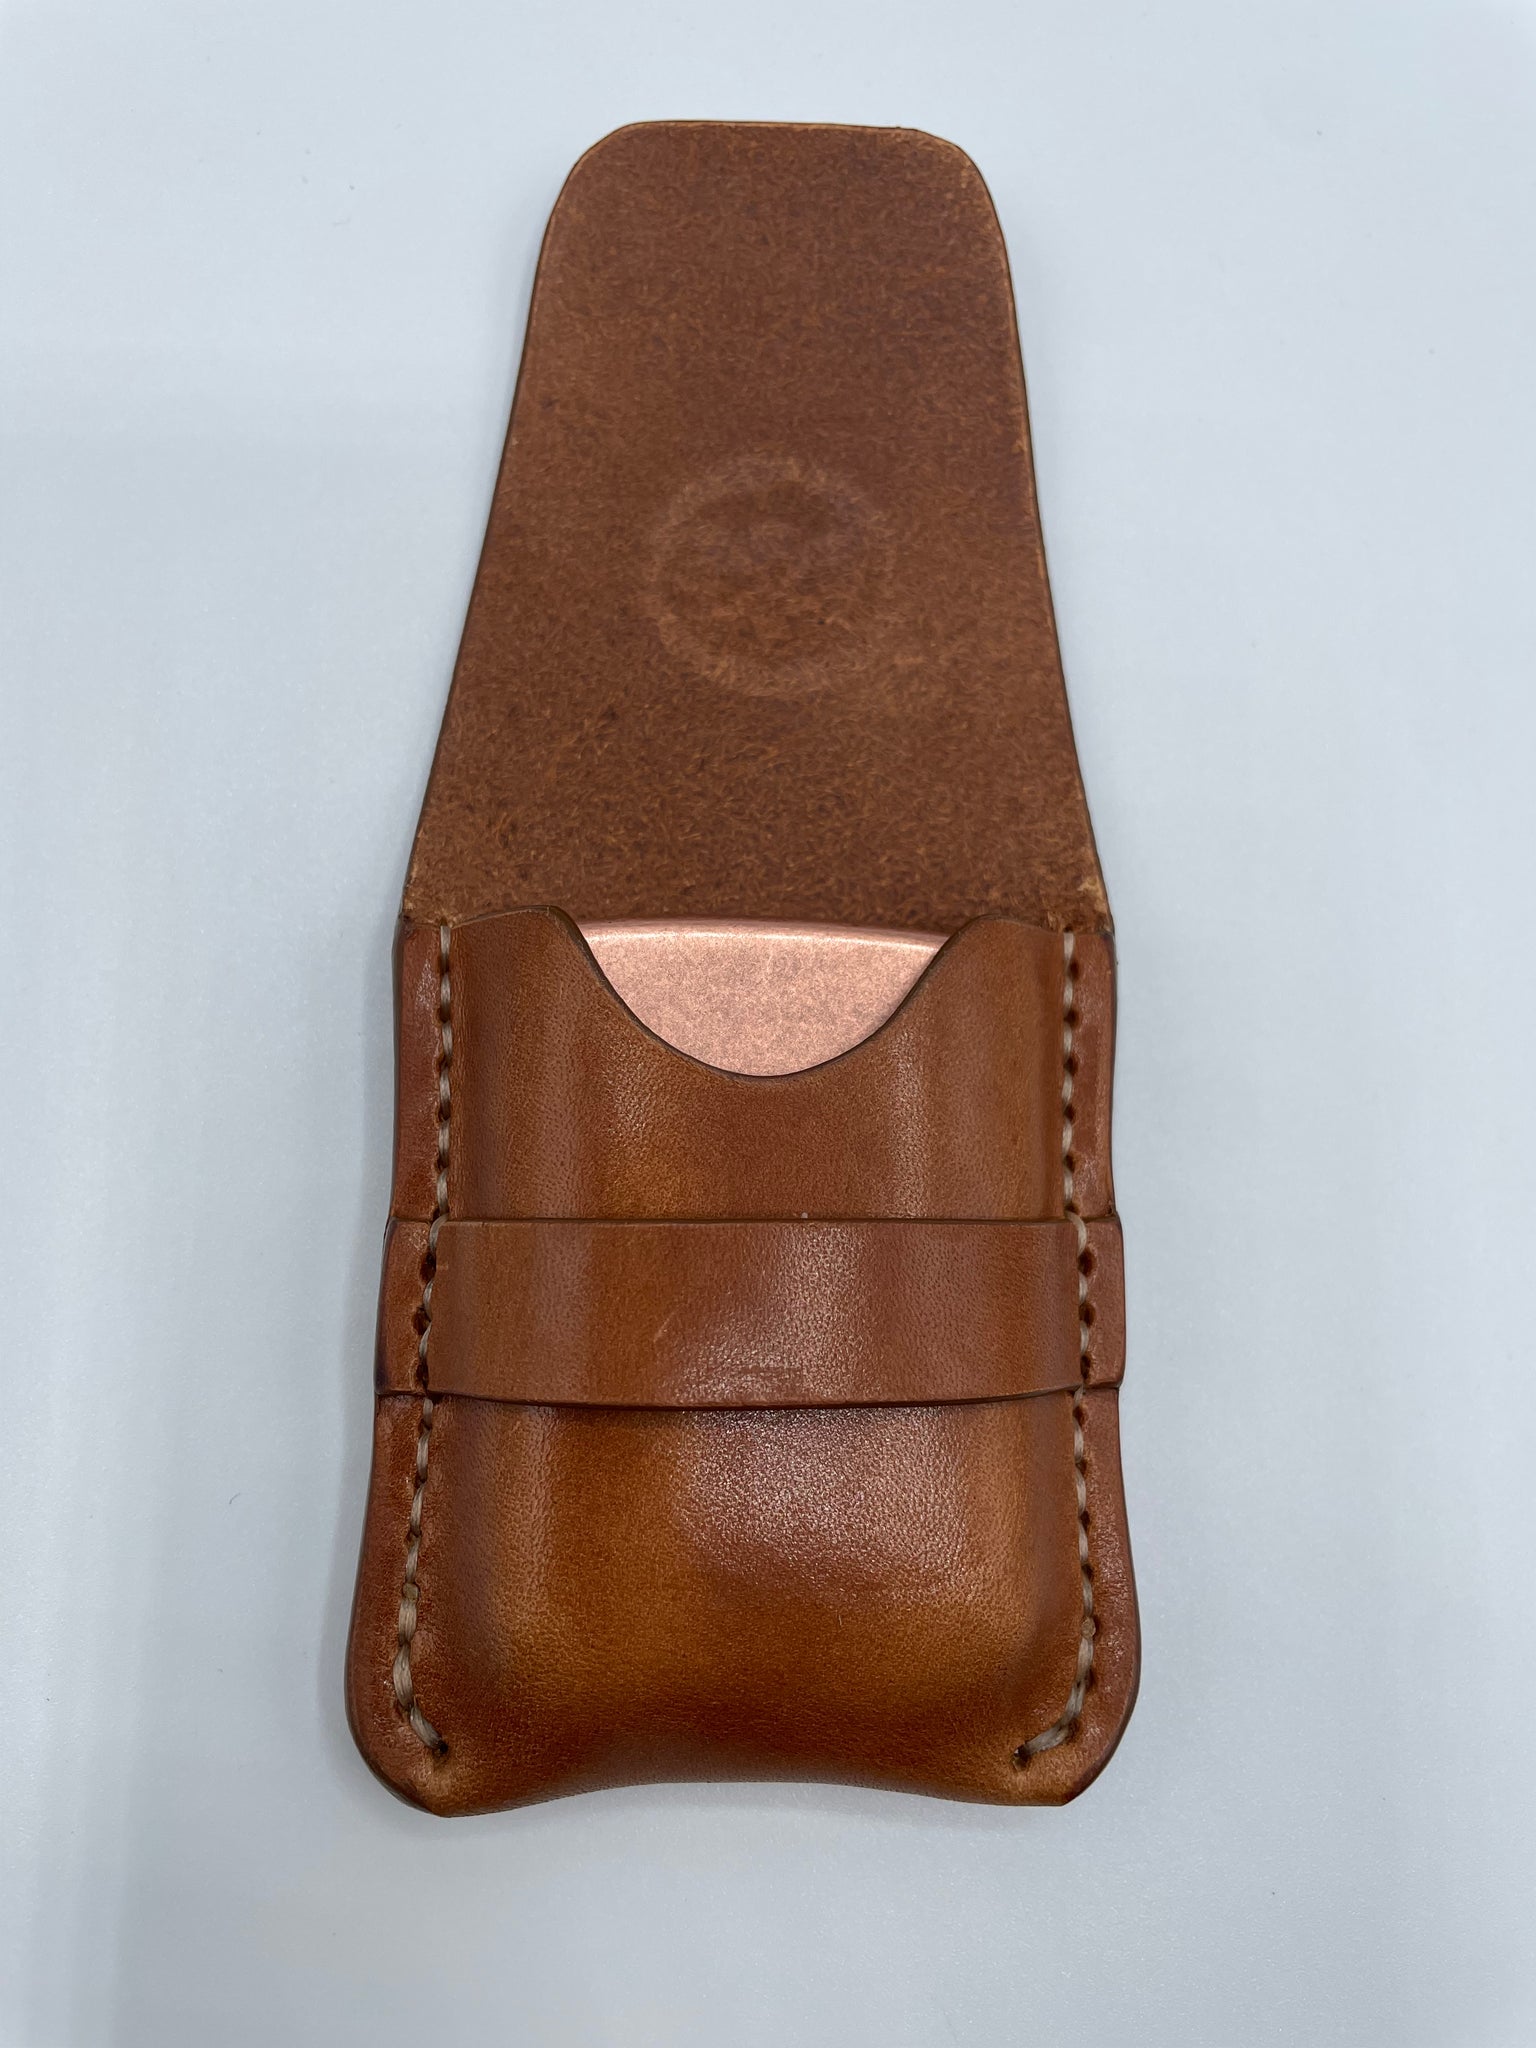 Zippo Lighter Sleeve – CASE Leatherworks